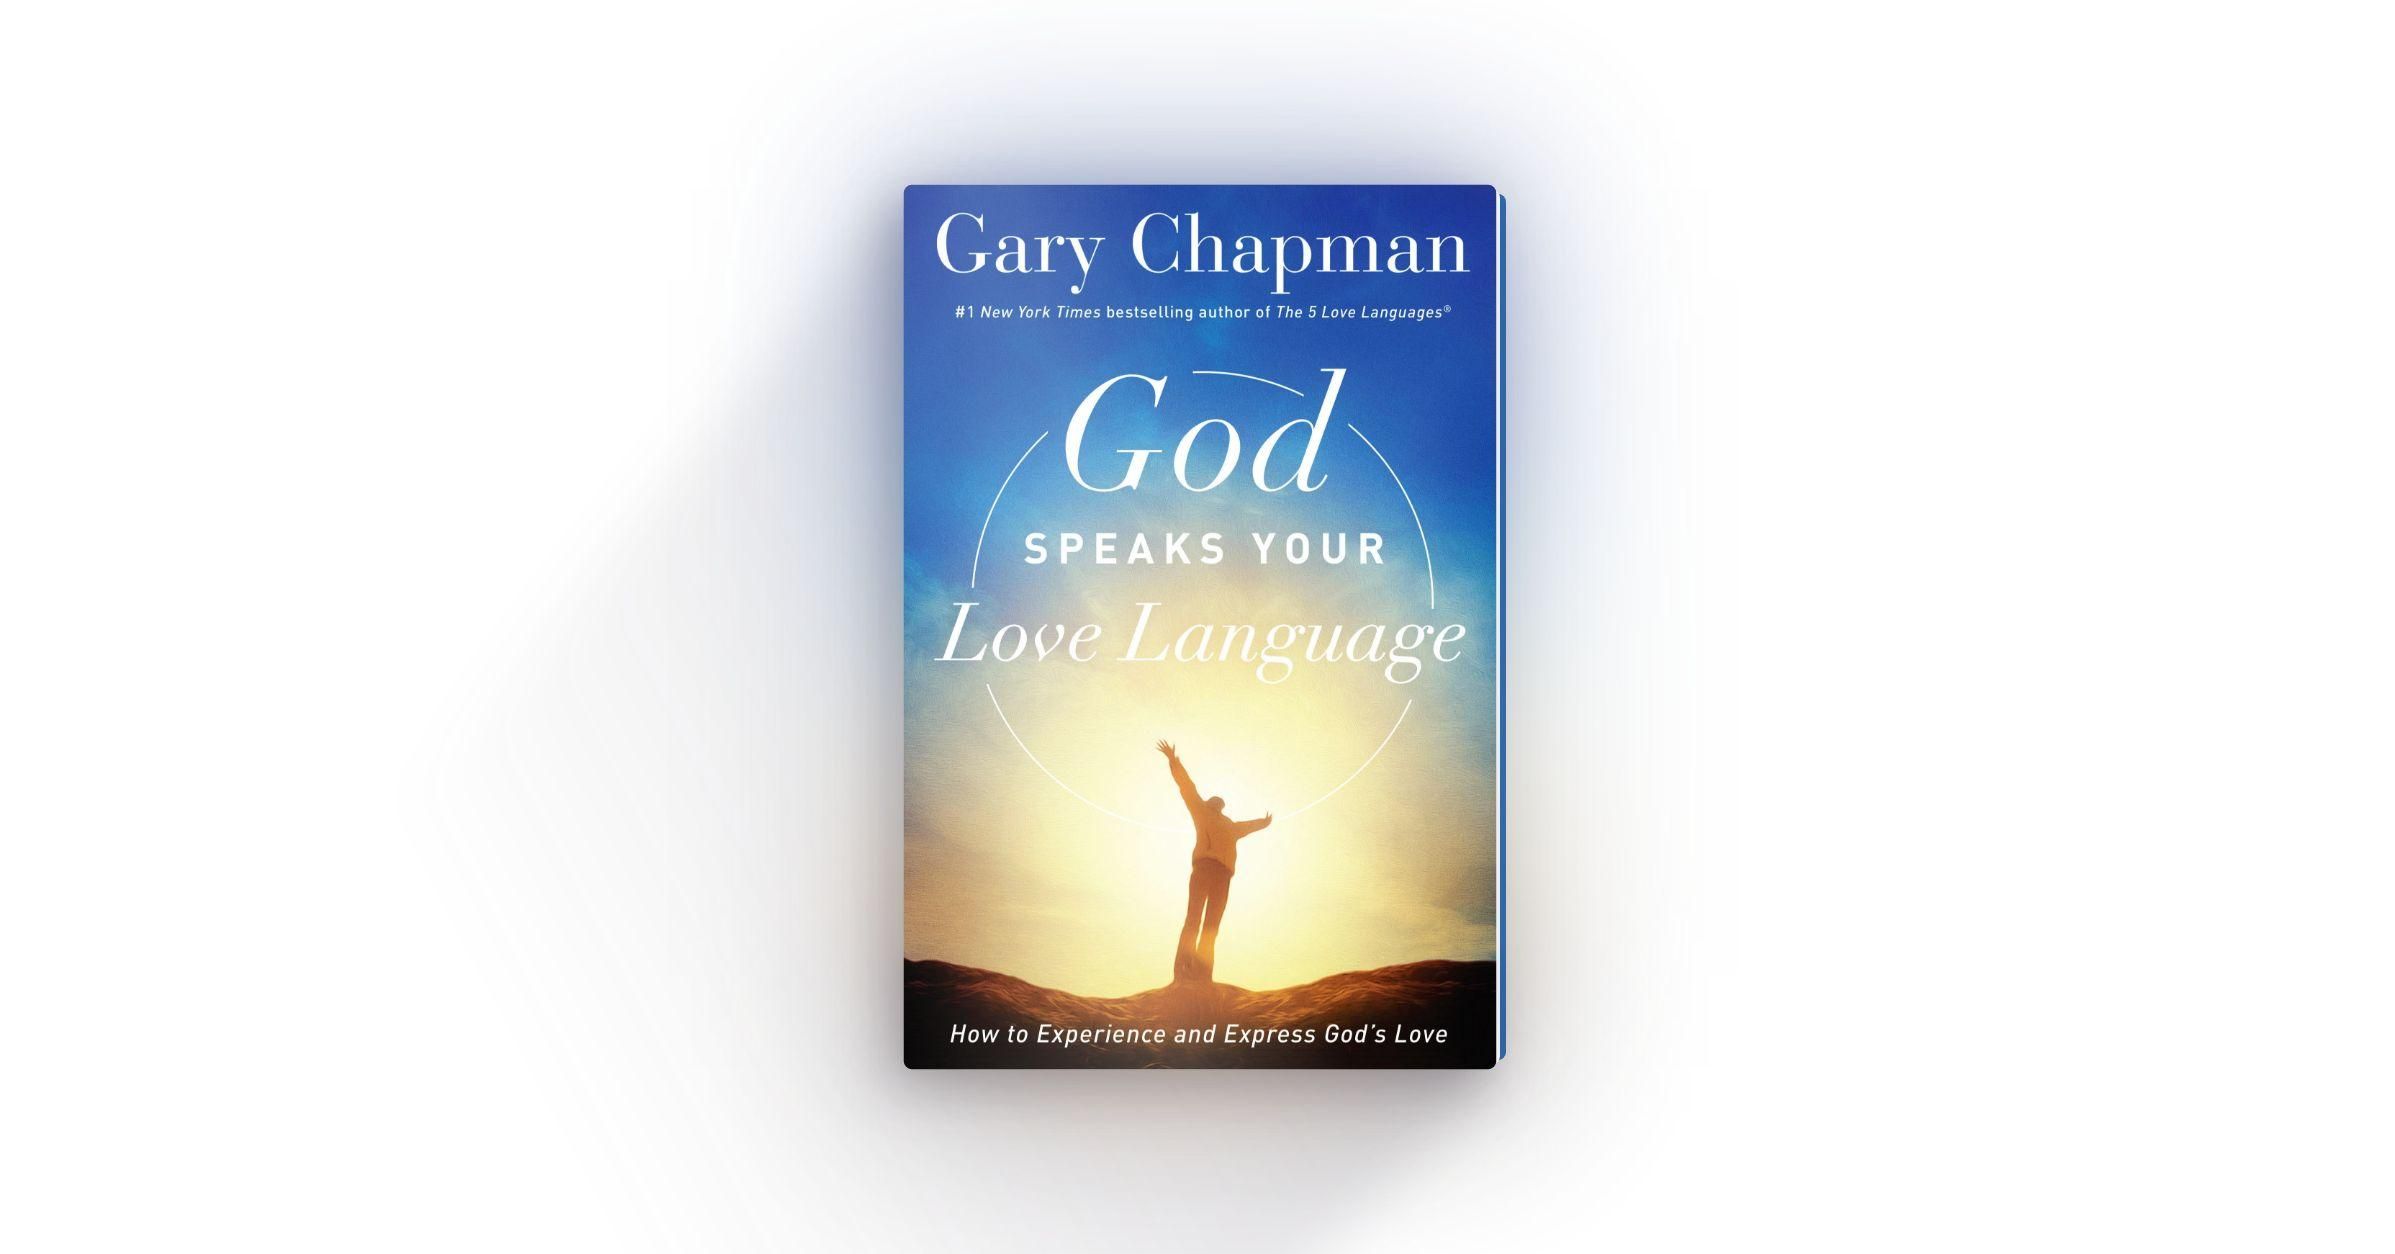 God Speaks Your Love Language